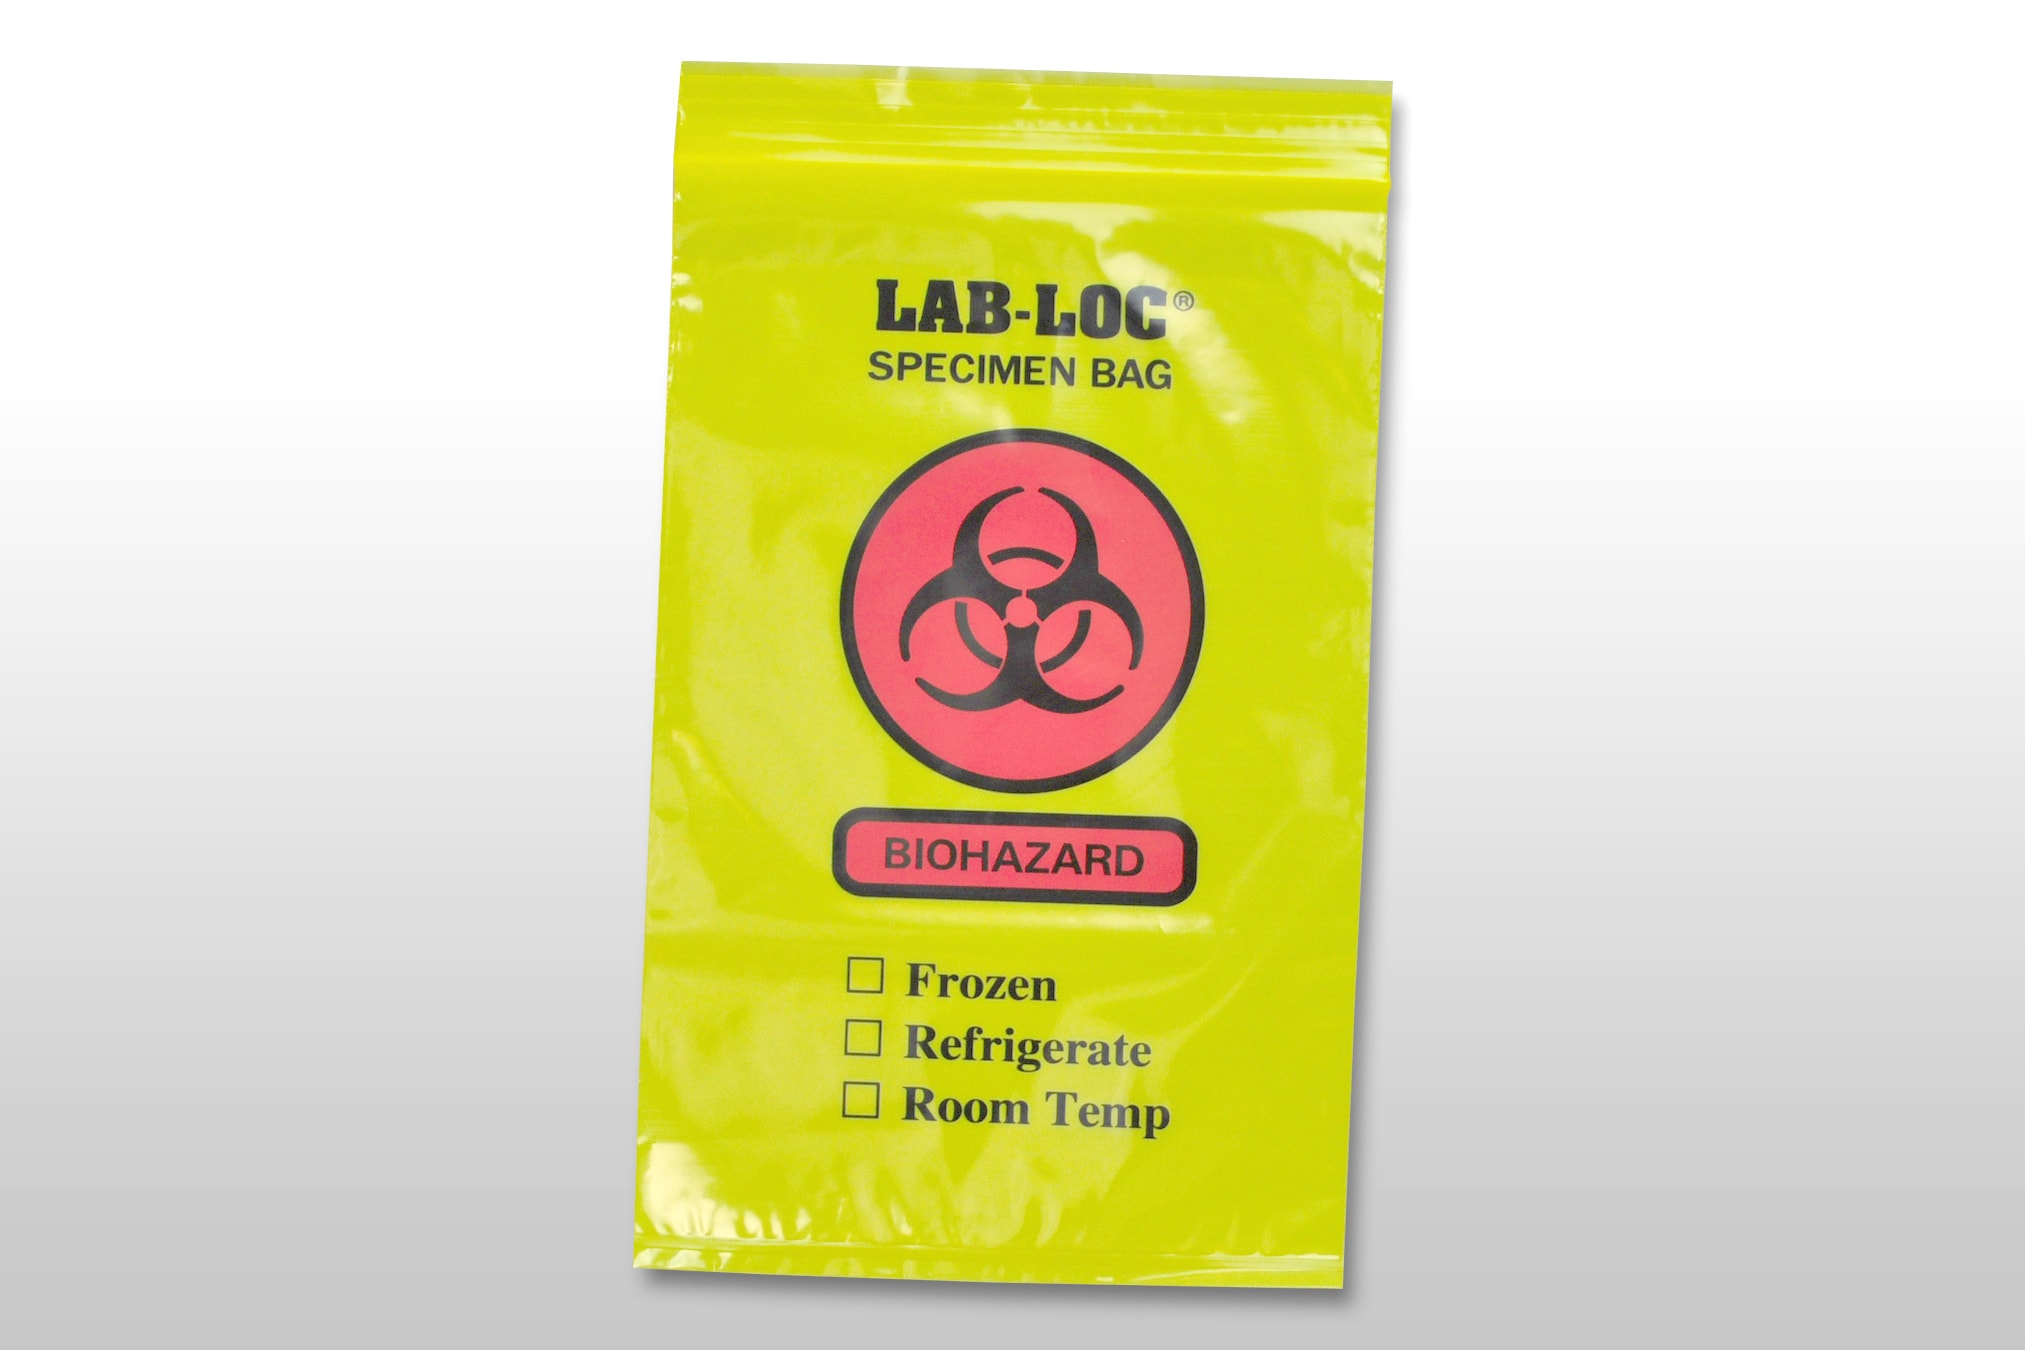 6" X 9" Yellow Tint Reclosable 3-Wall Specimen Transfer Bag (Biohazard)